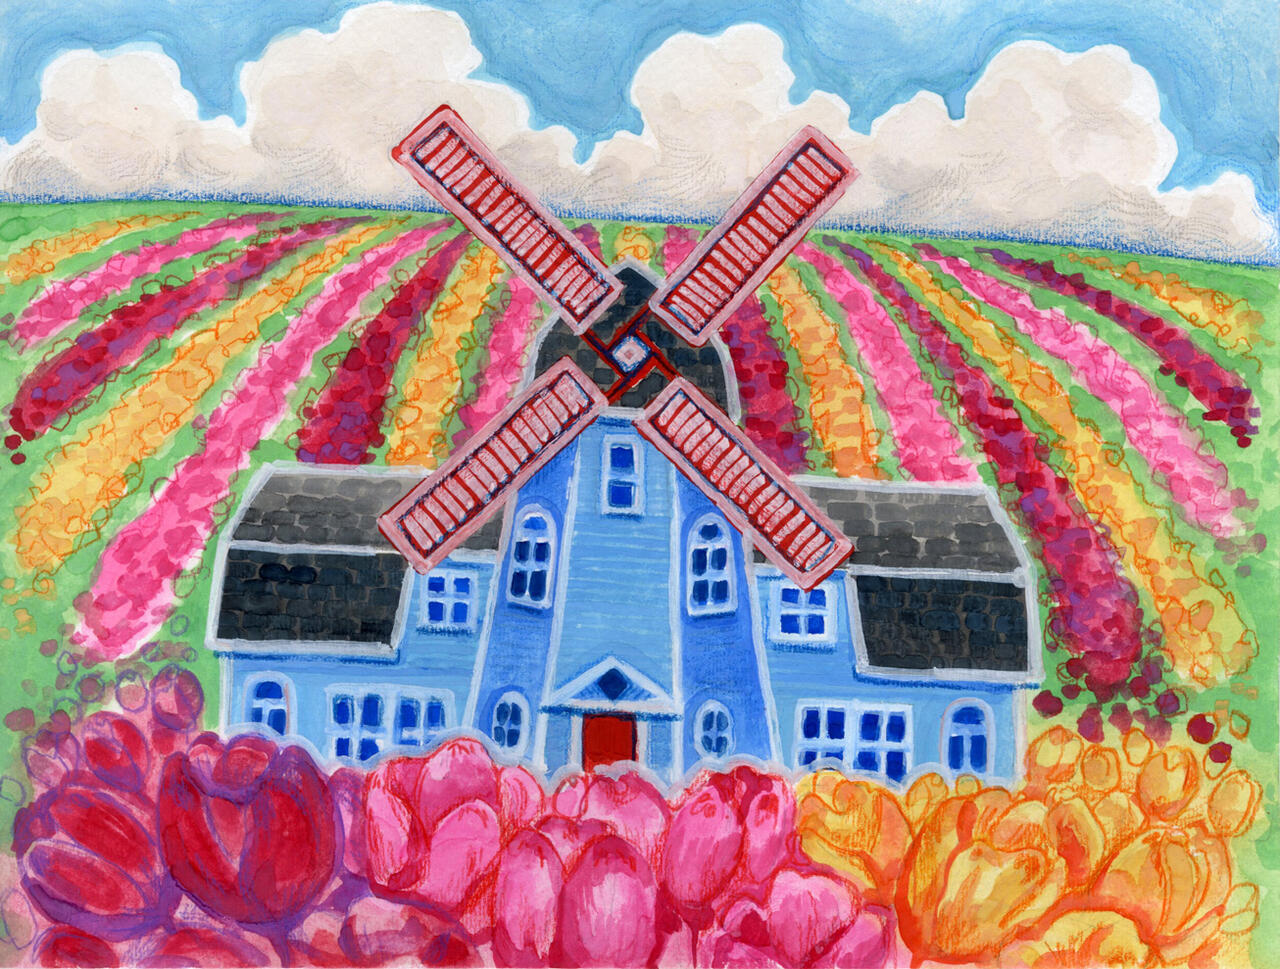 Windmill painterly illustration by Emma Crosby